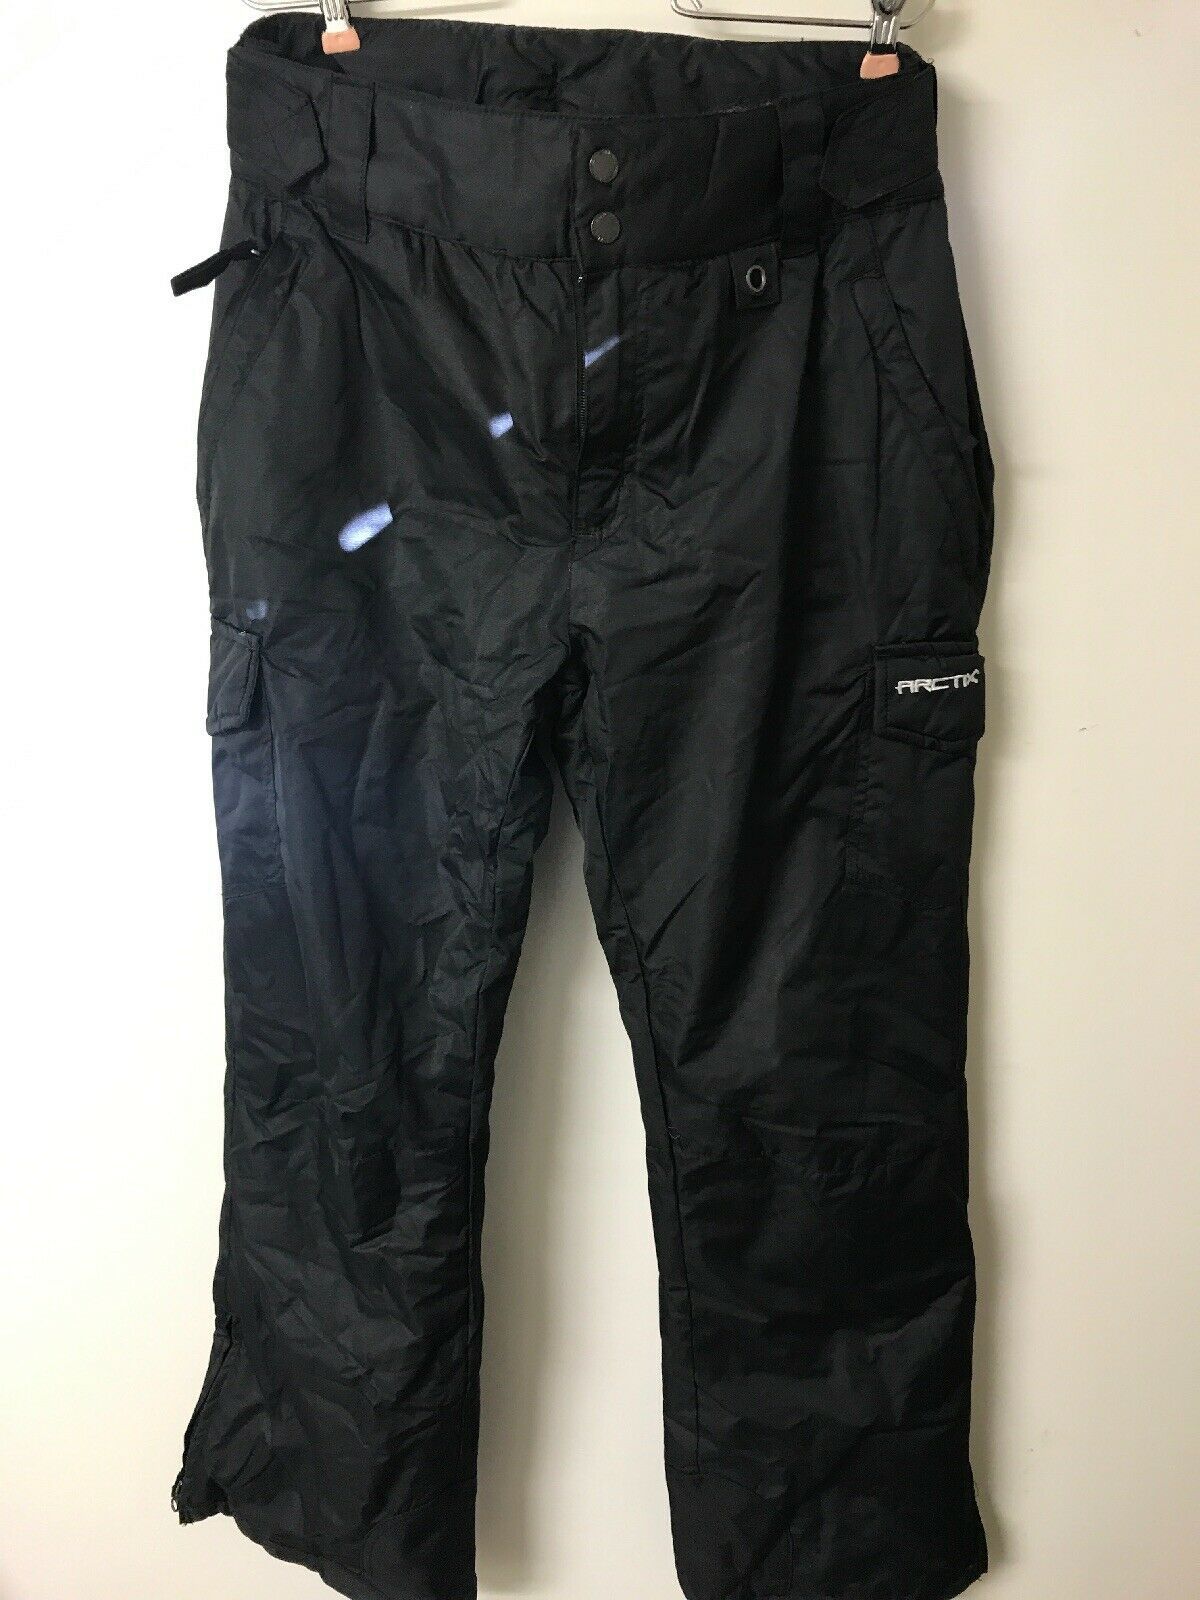 Arctix Women’s's SnowSport Cargo Pants, Black, Large. New With Defects ...